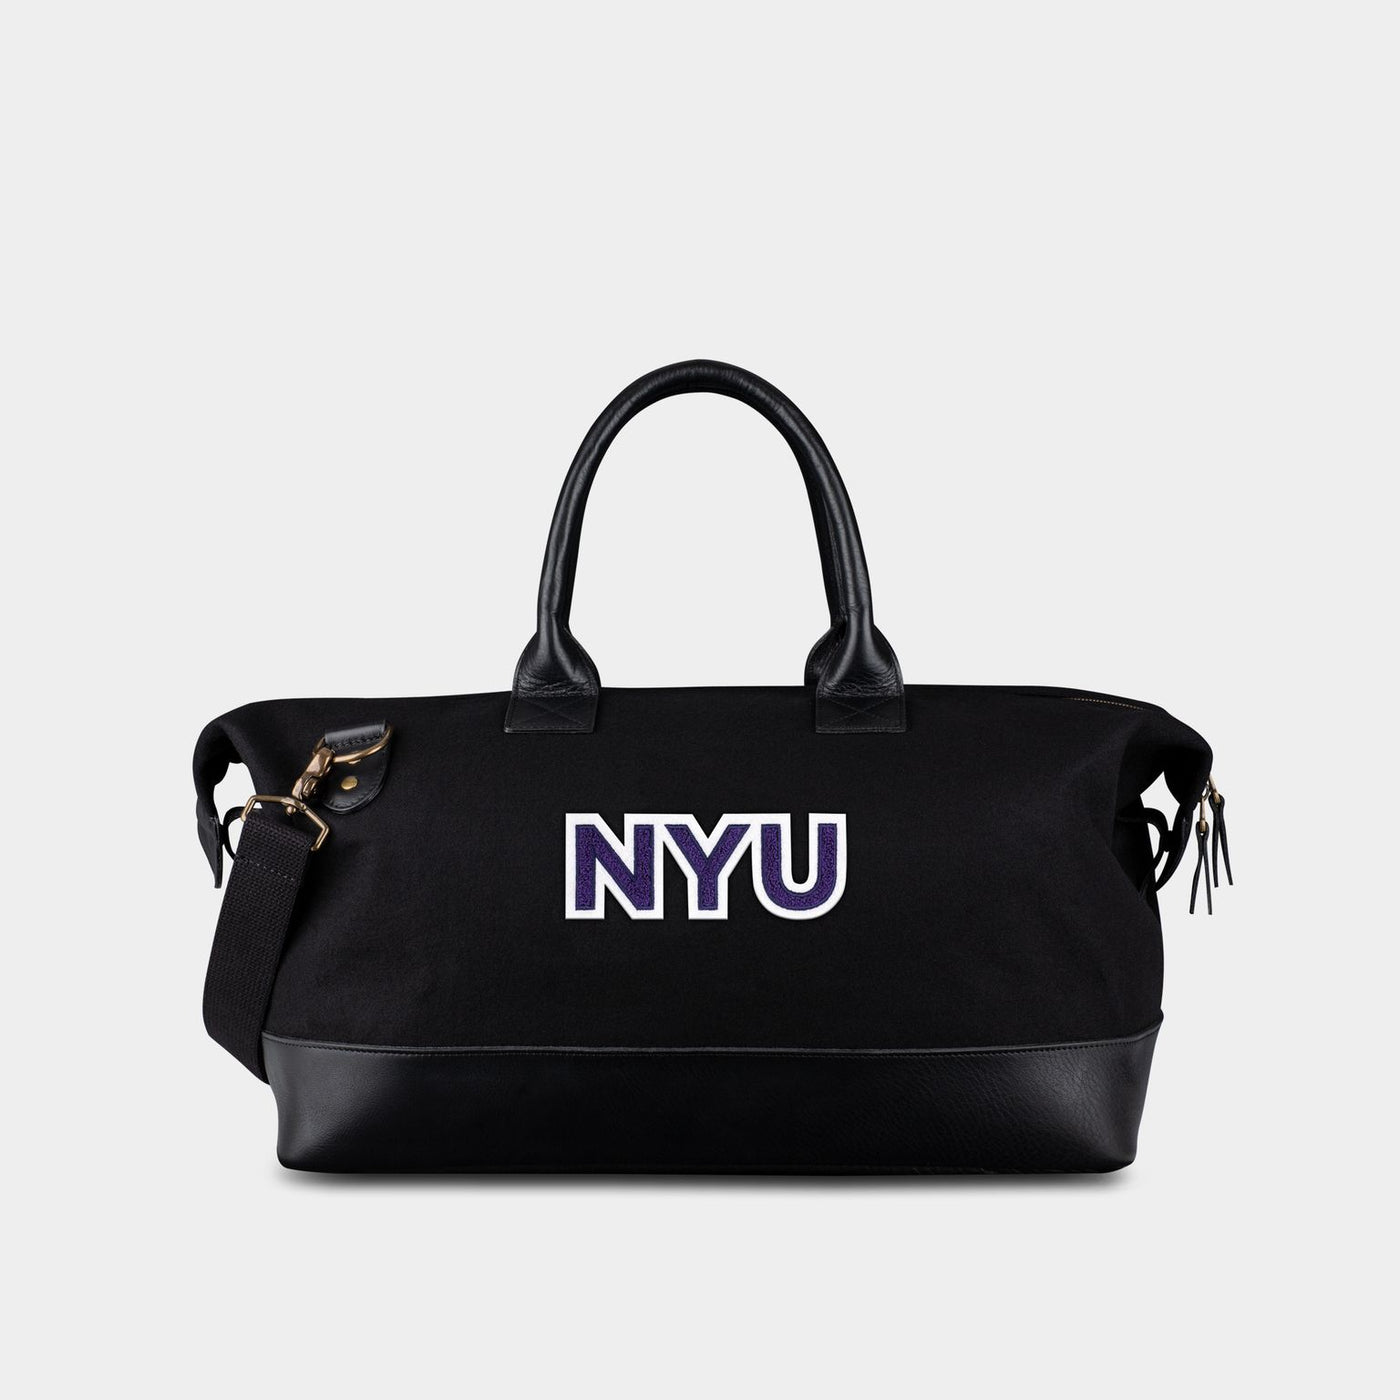 NYU Violets "NYU" Weekender Duffle Bag